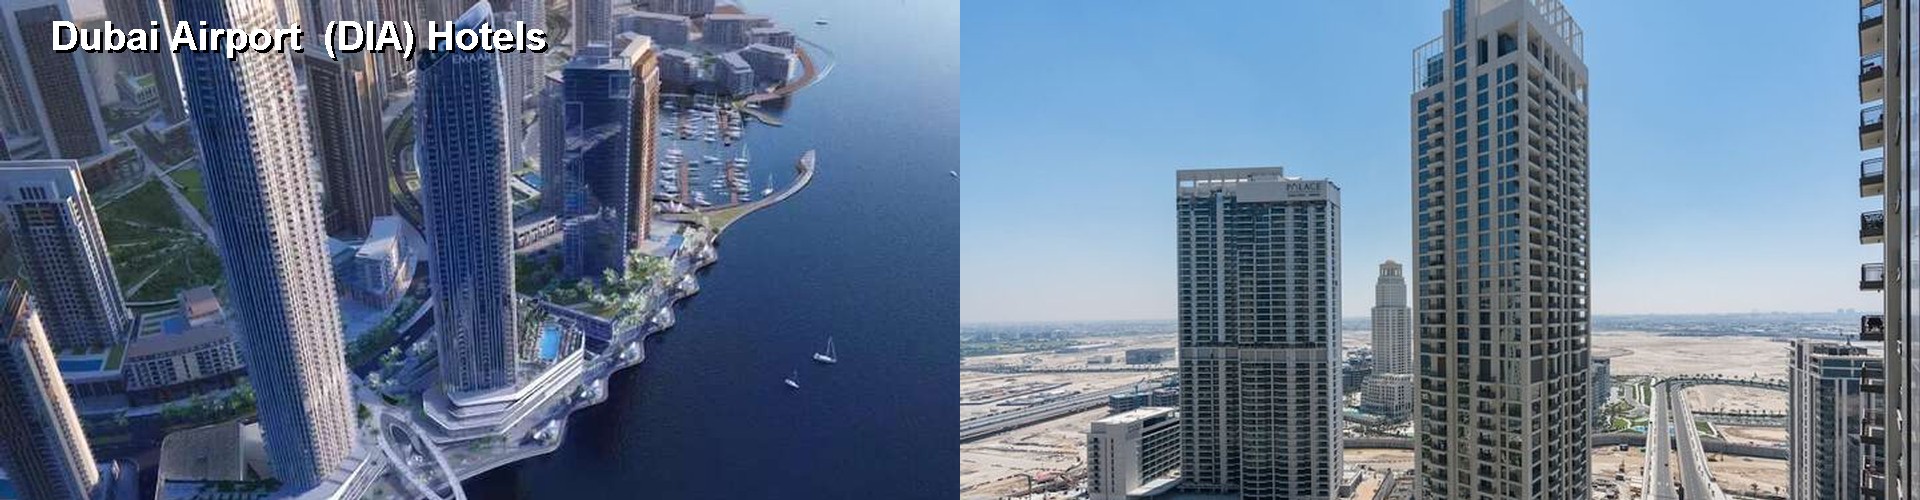 5 Best Hotels near Dubai Airport  (DIA)